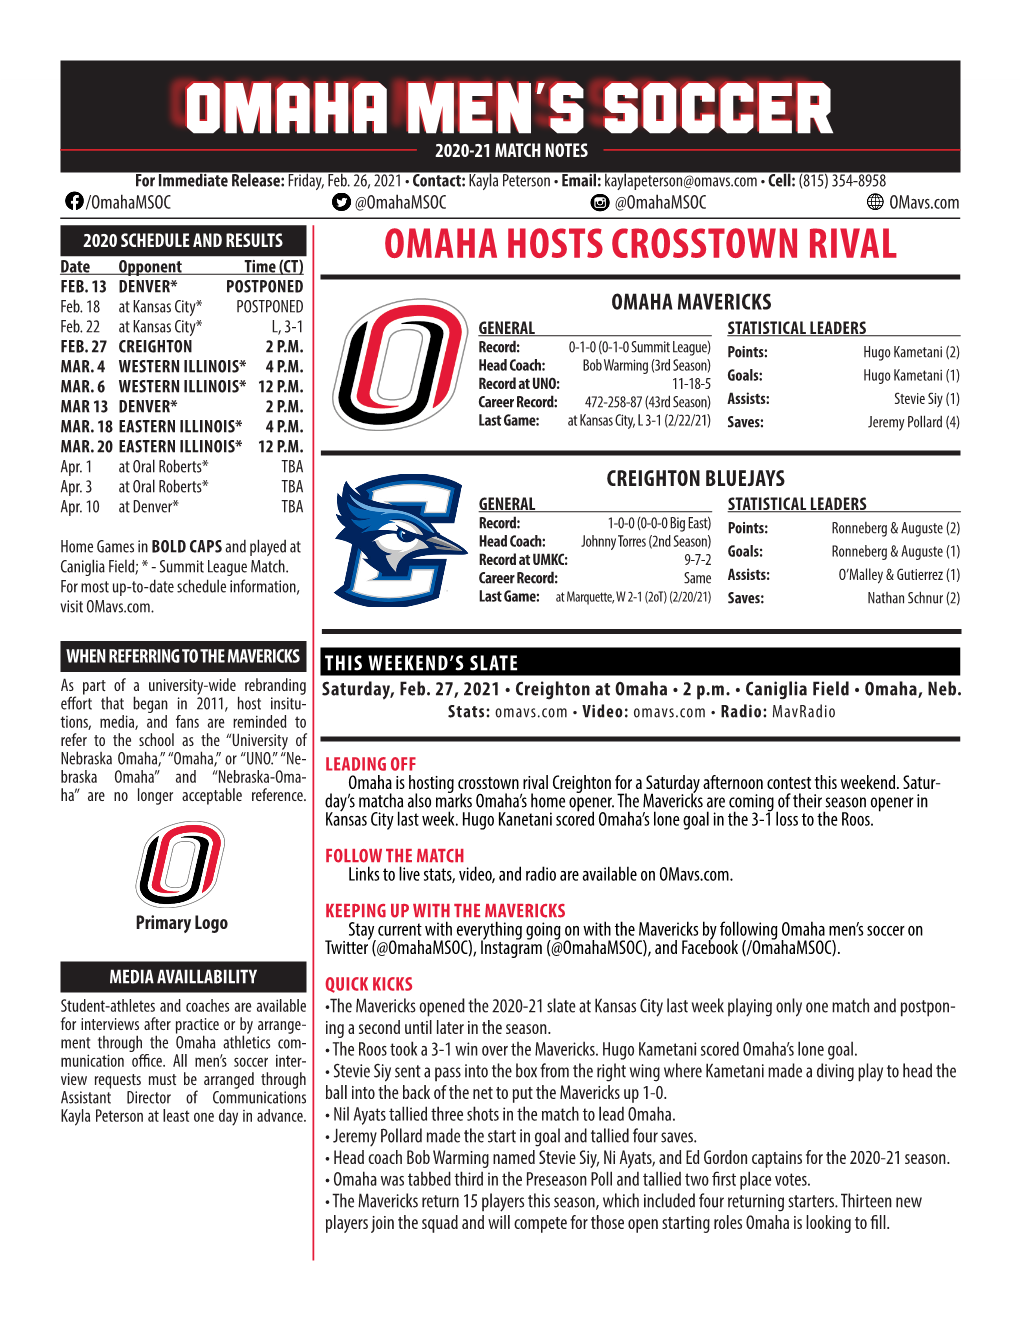 Omaha Men's Soccer 2020-21OMAHA Combined OVERALL Team Statistics (Asstatistics of Feb 23, 2021) All Games